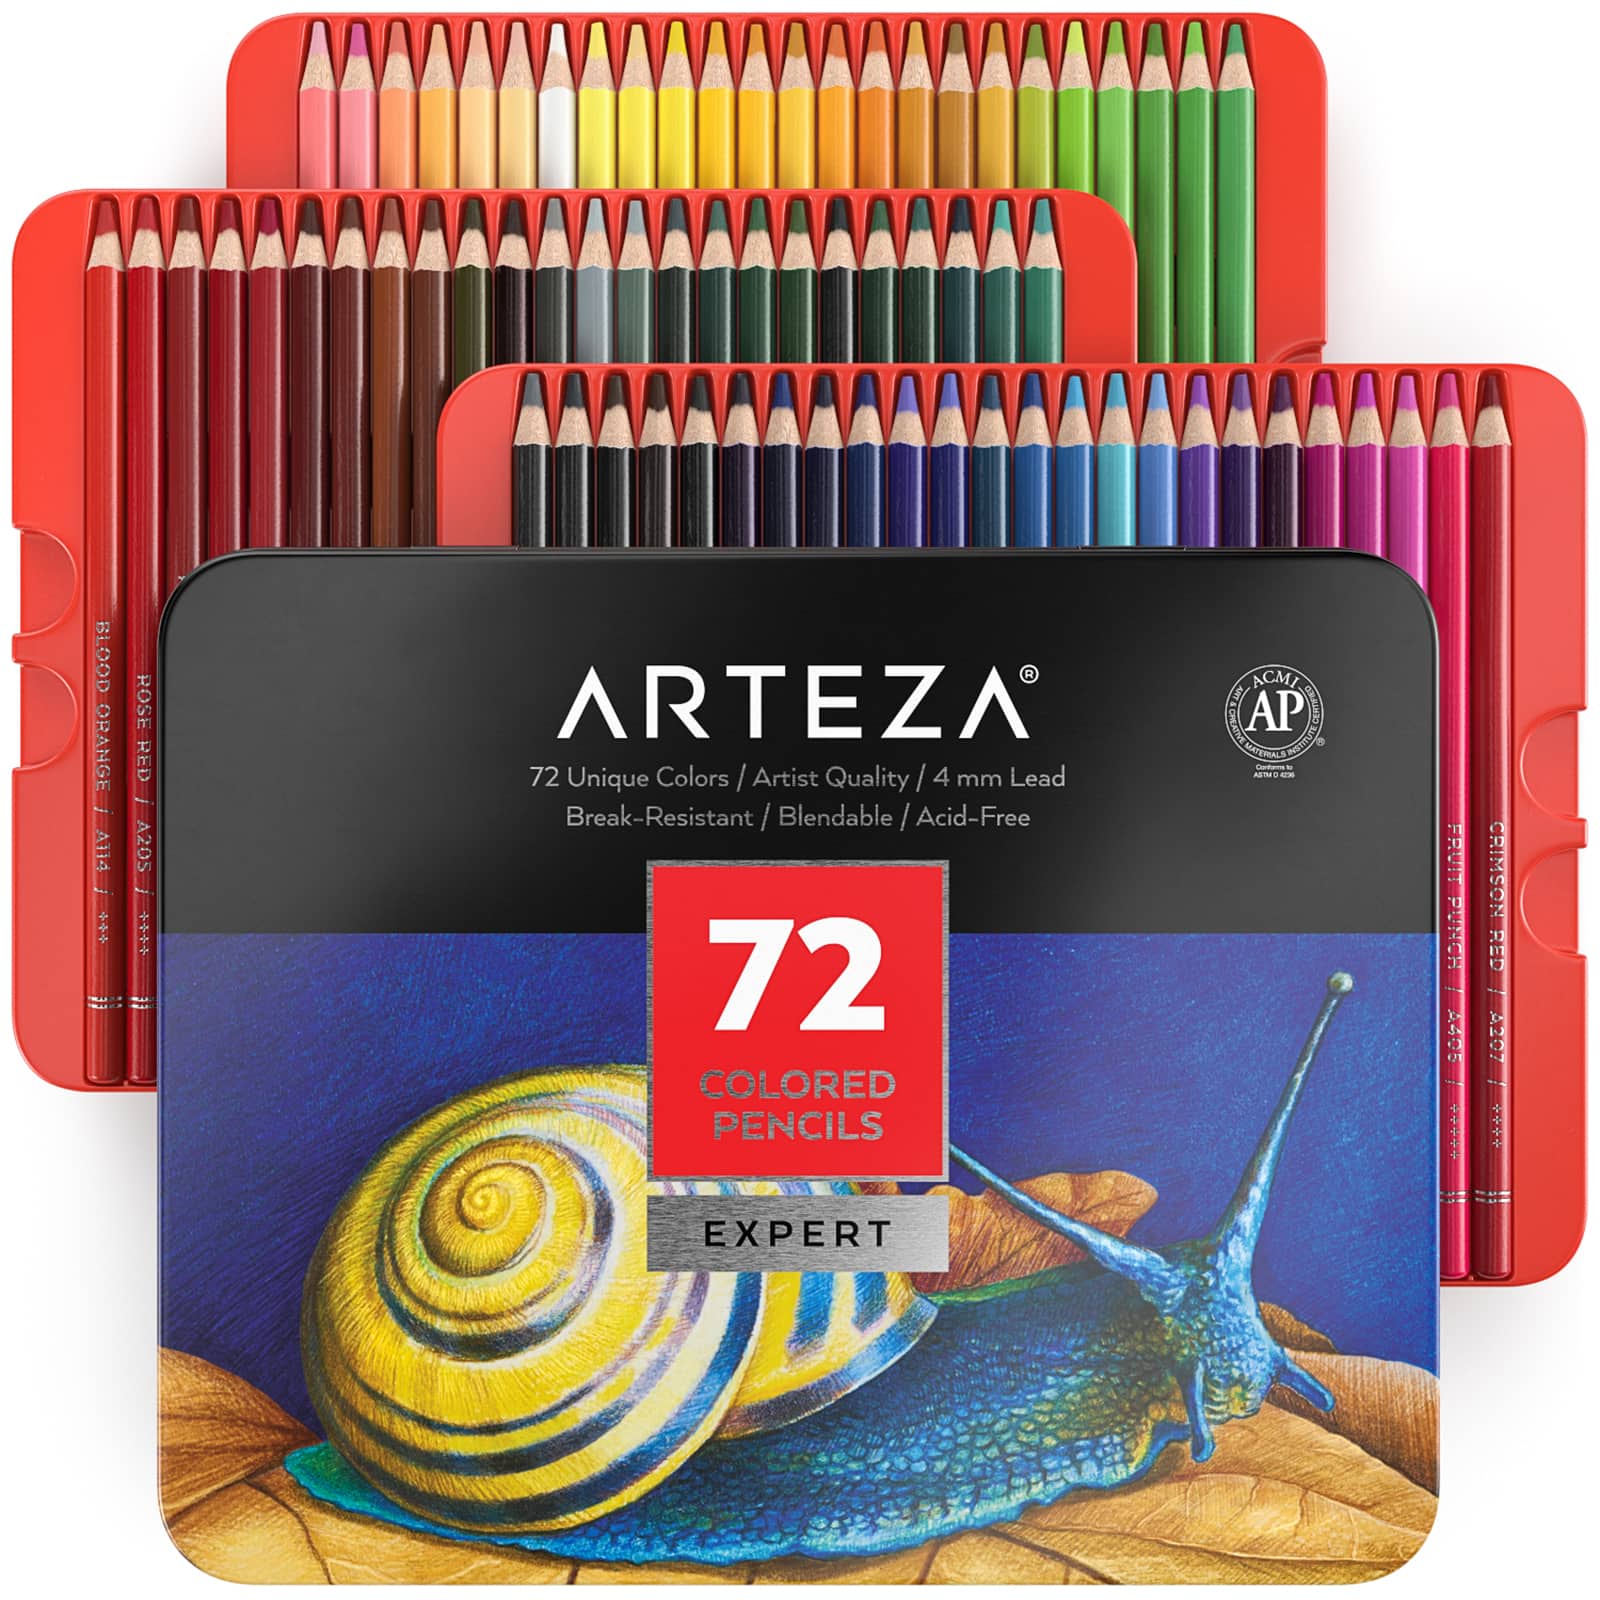 Arteza Expert Colored Pencils Review by MysticSparkleWings on DeviantArt